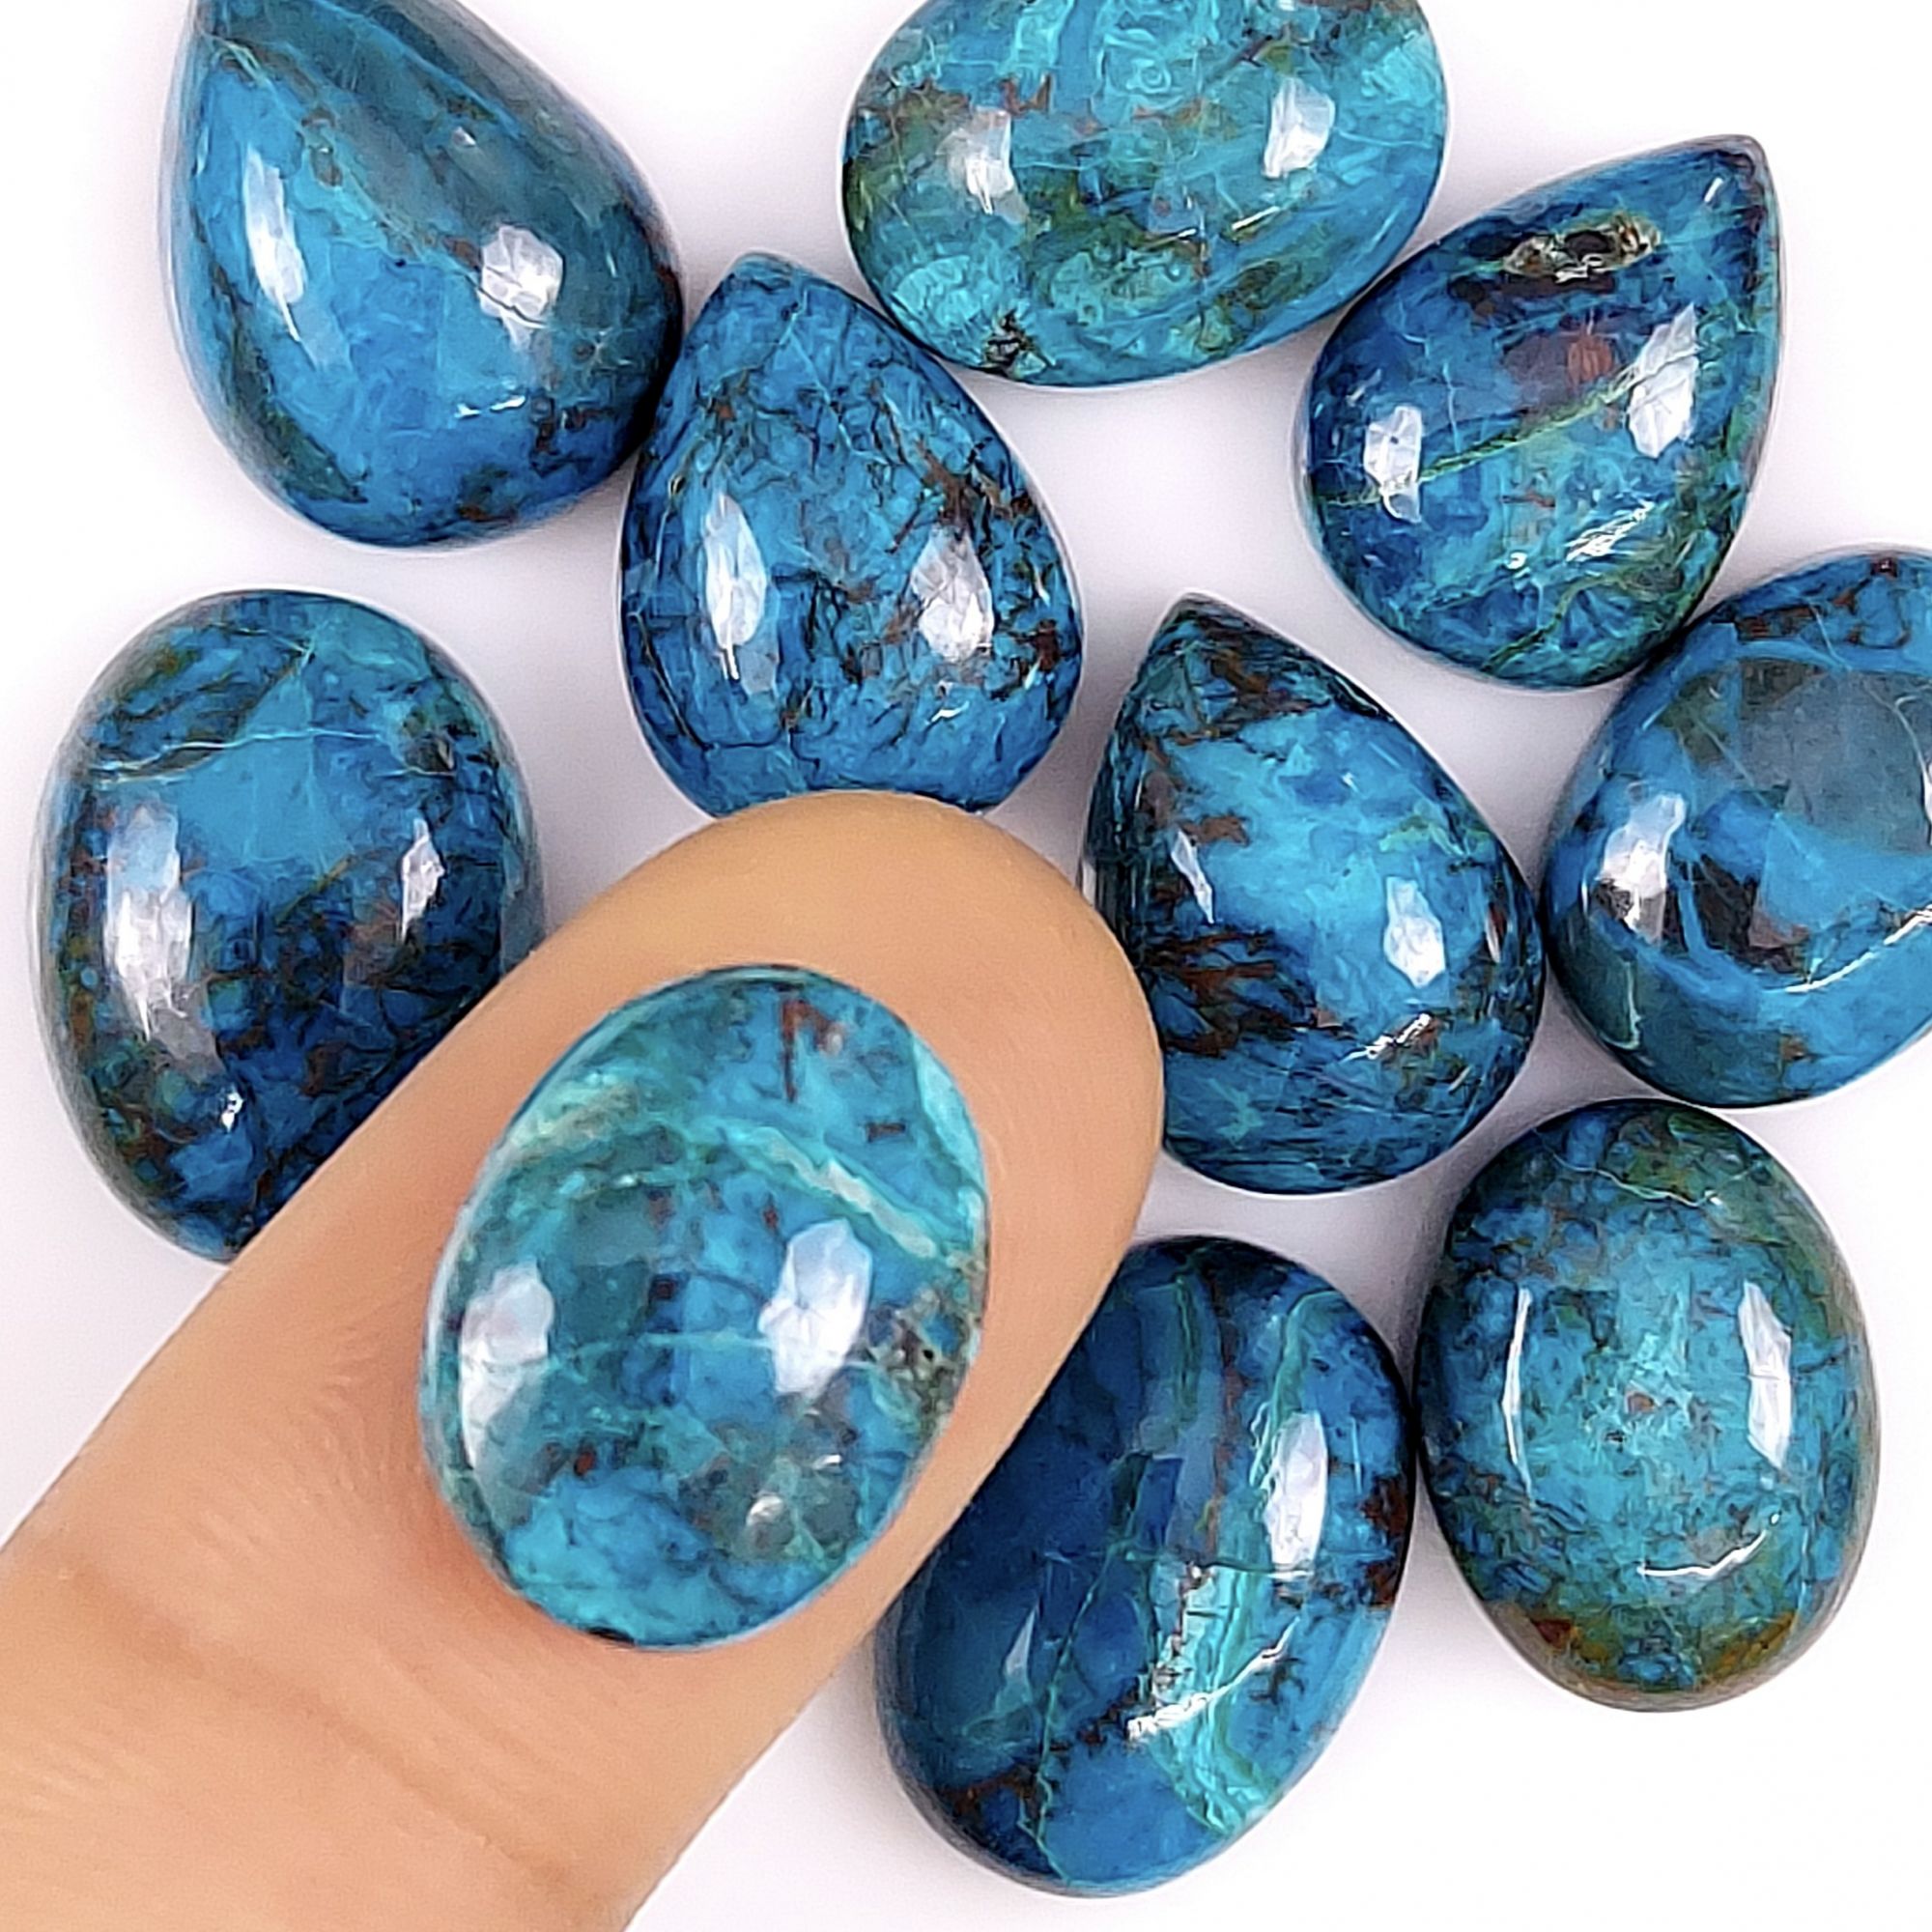 10 Pcs 116Cts Natural Chrysocolla Cabochon Lot Healing stone crystal,Loose gemstones Chrysocolla Mix Shape & Size Jewelry making Gemstone 17x14 6x12mm #5738